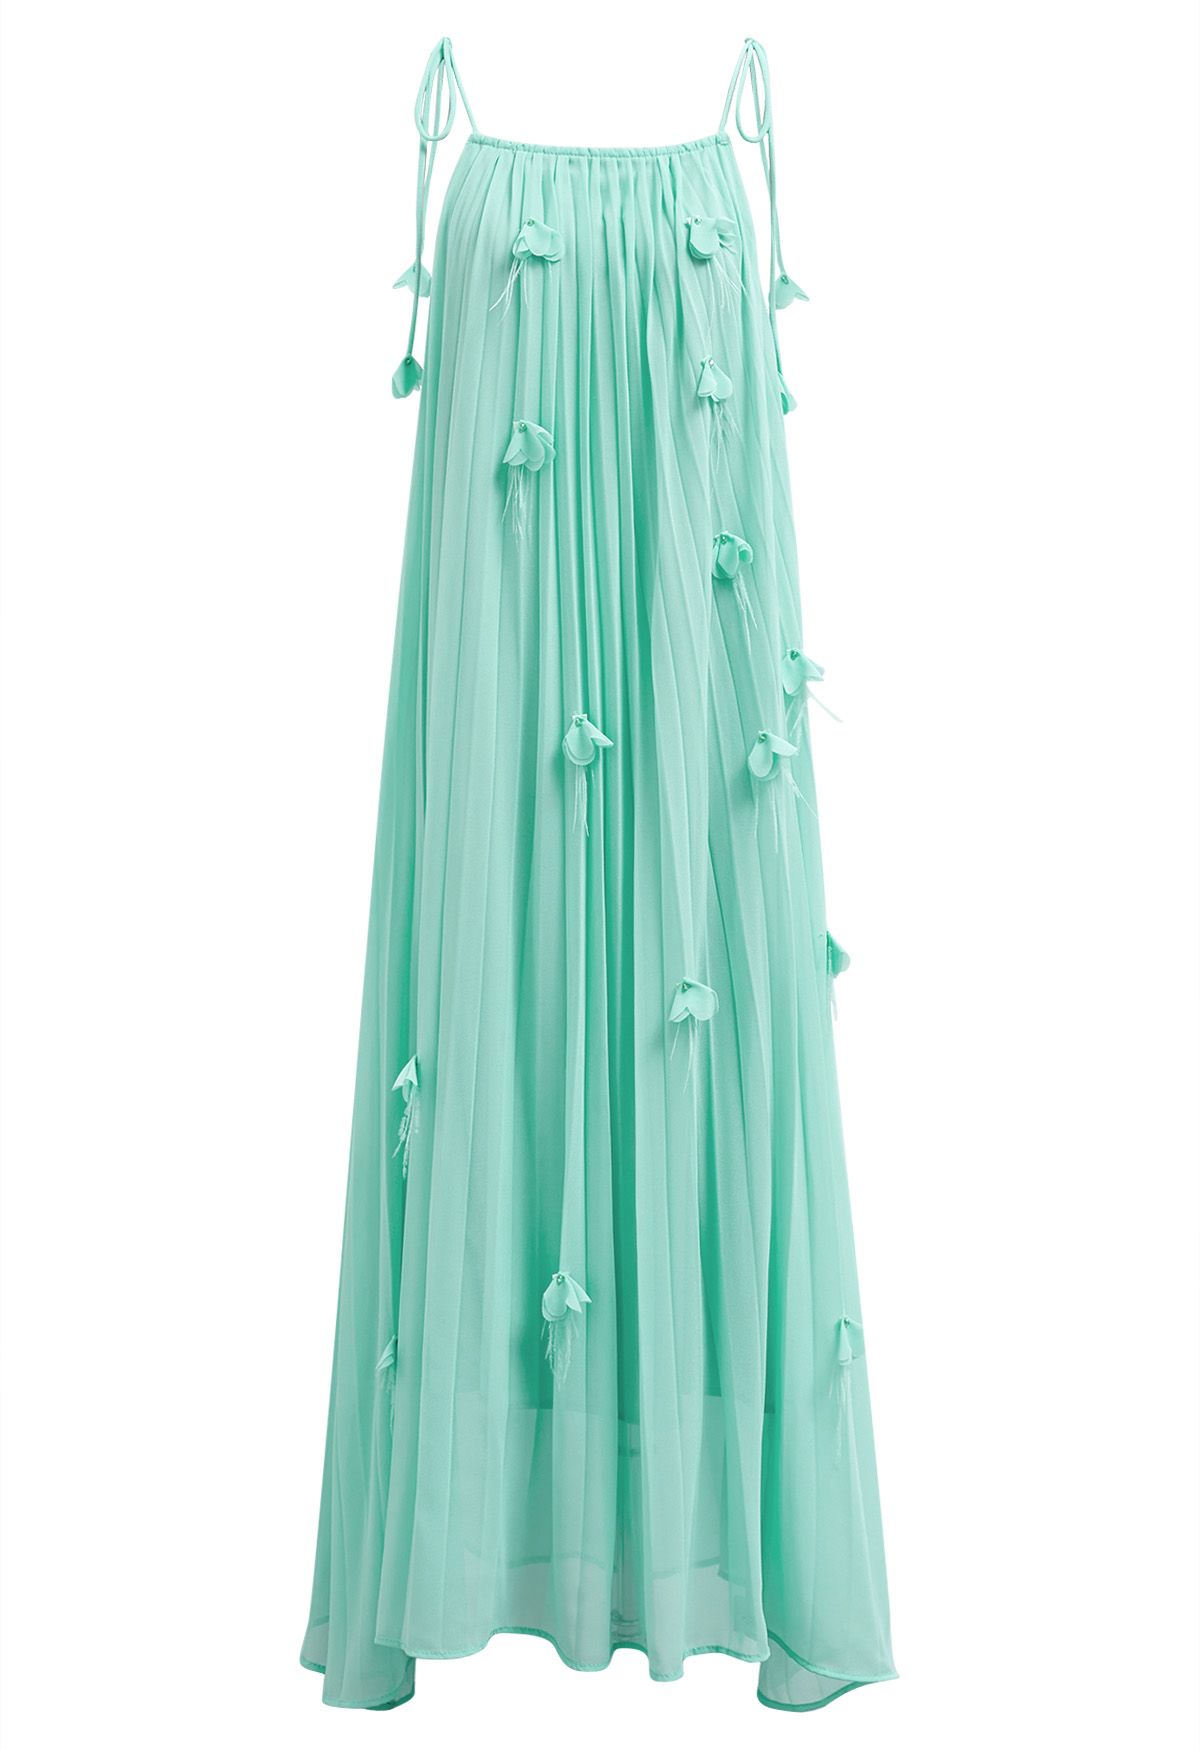 3D Floral Tie-Shoulder Chiffon Pleated Dress in Mint